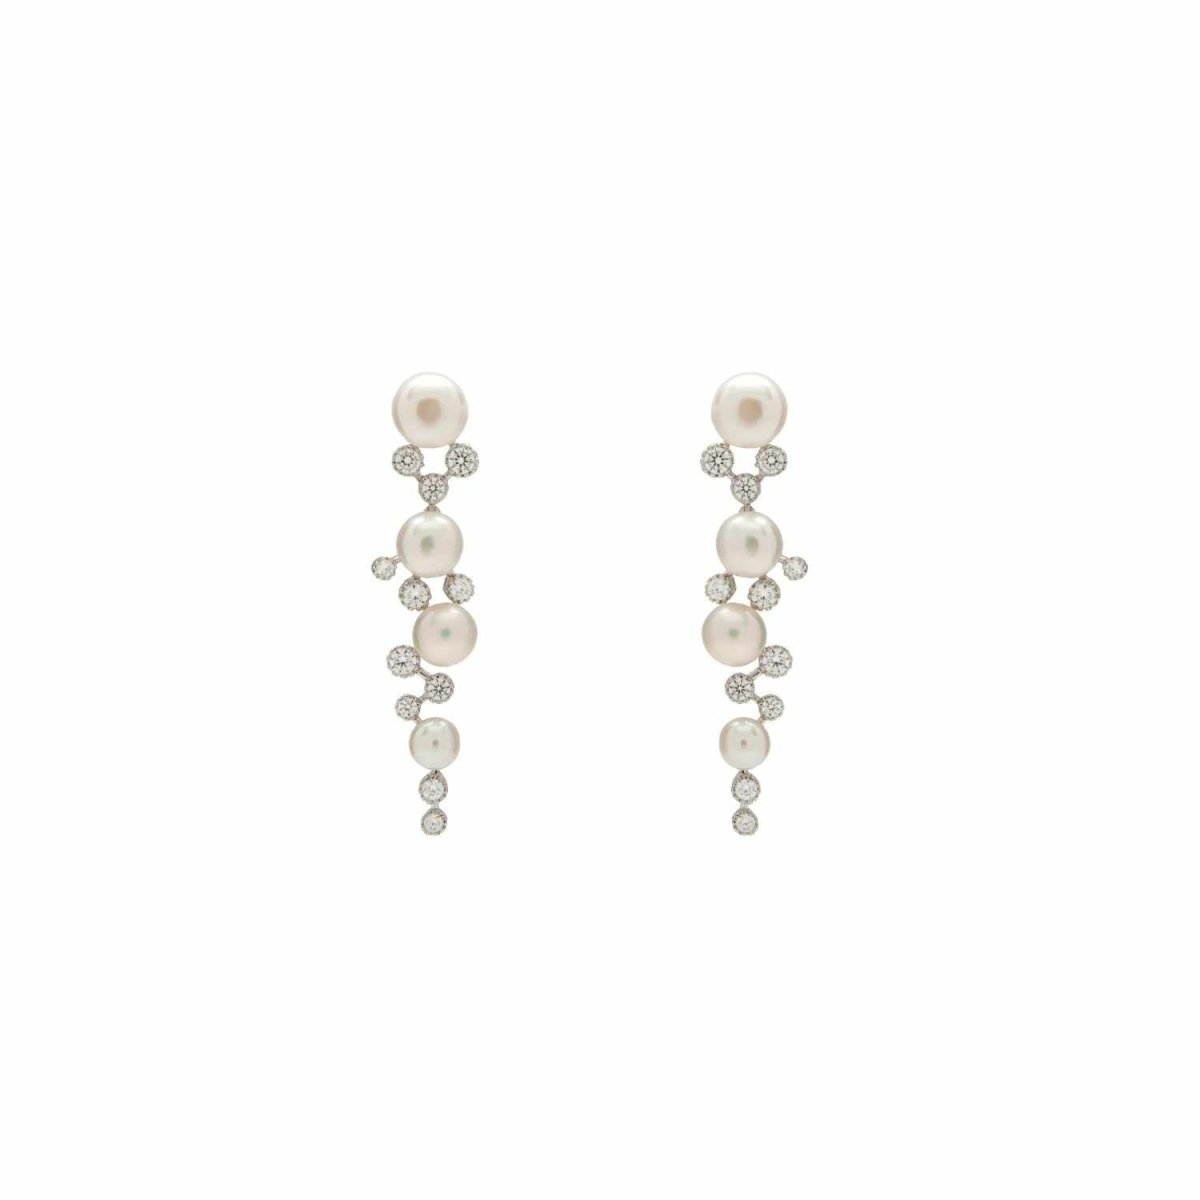 Earrings - Long earrings combined design of pearls and zircons